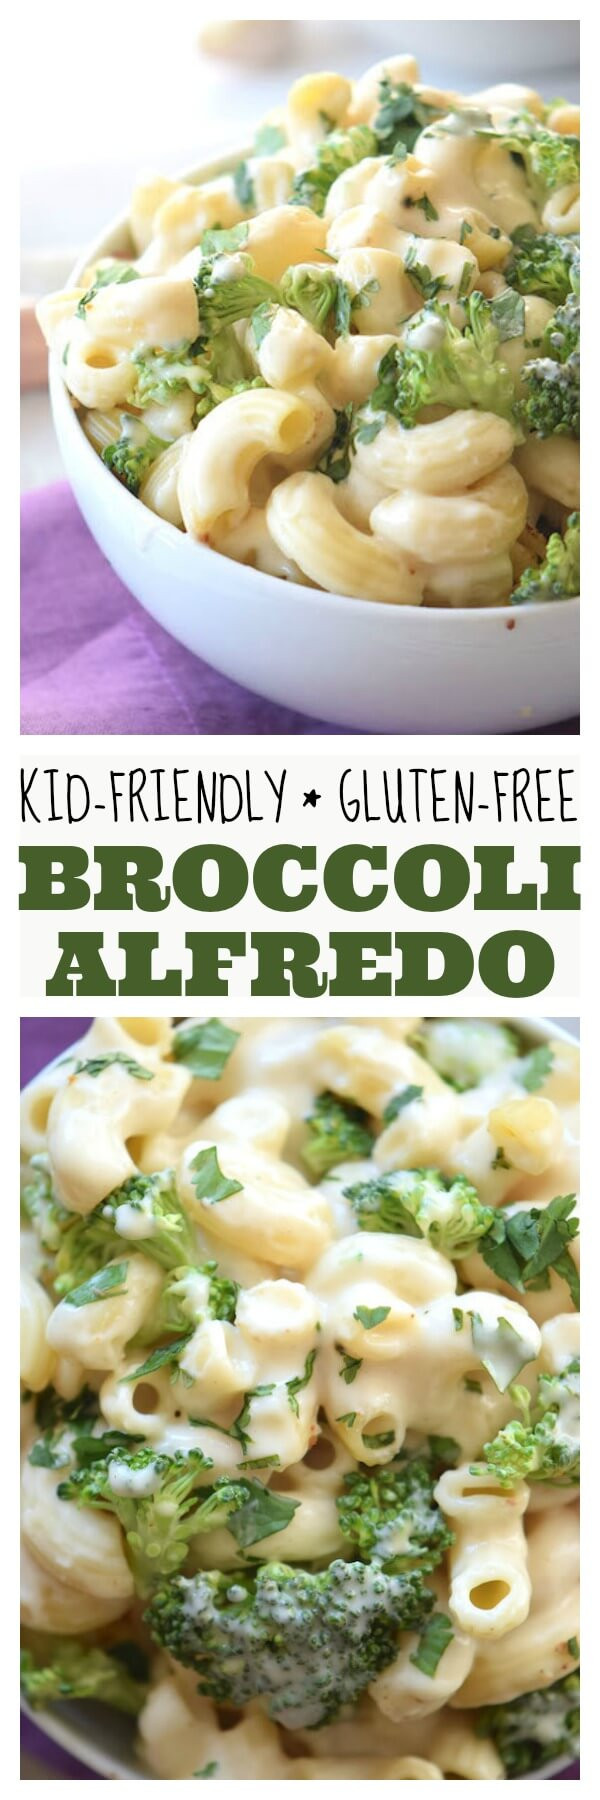 Kid Friendly Gluten Free Dairy Free Recipes
 Gluten Free Broccoli Alfredo In the Kids Kitchen